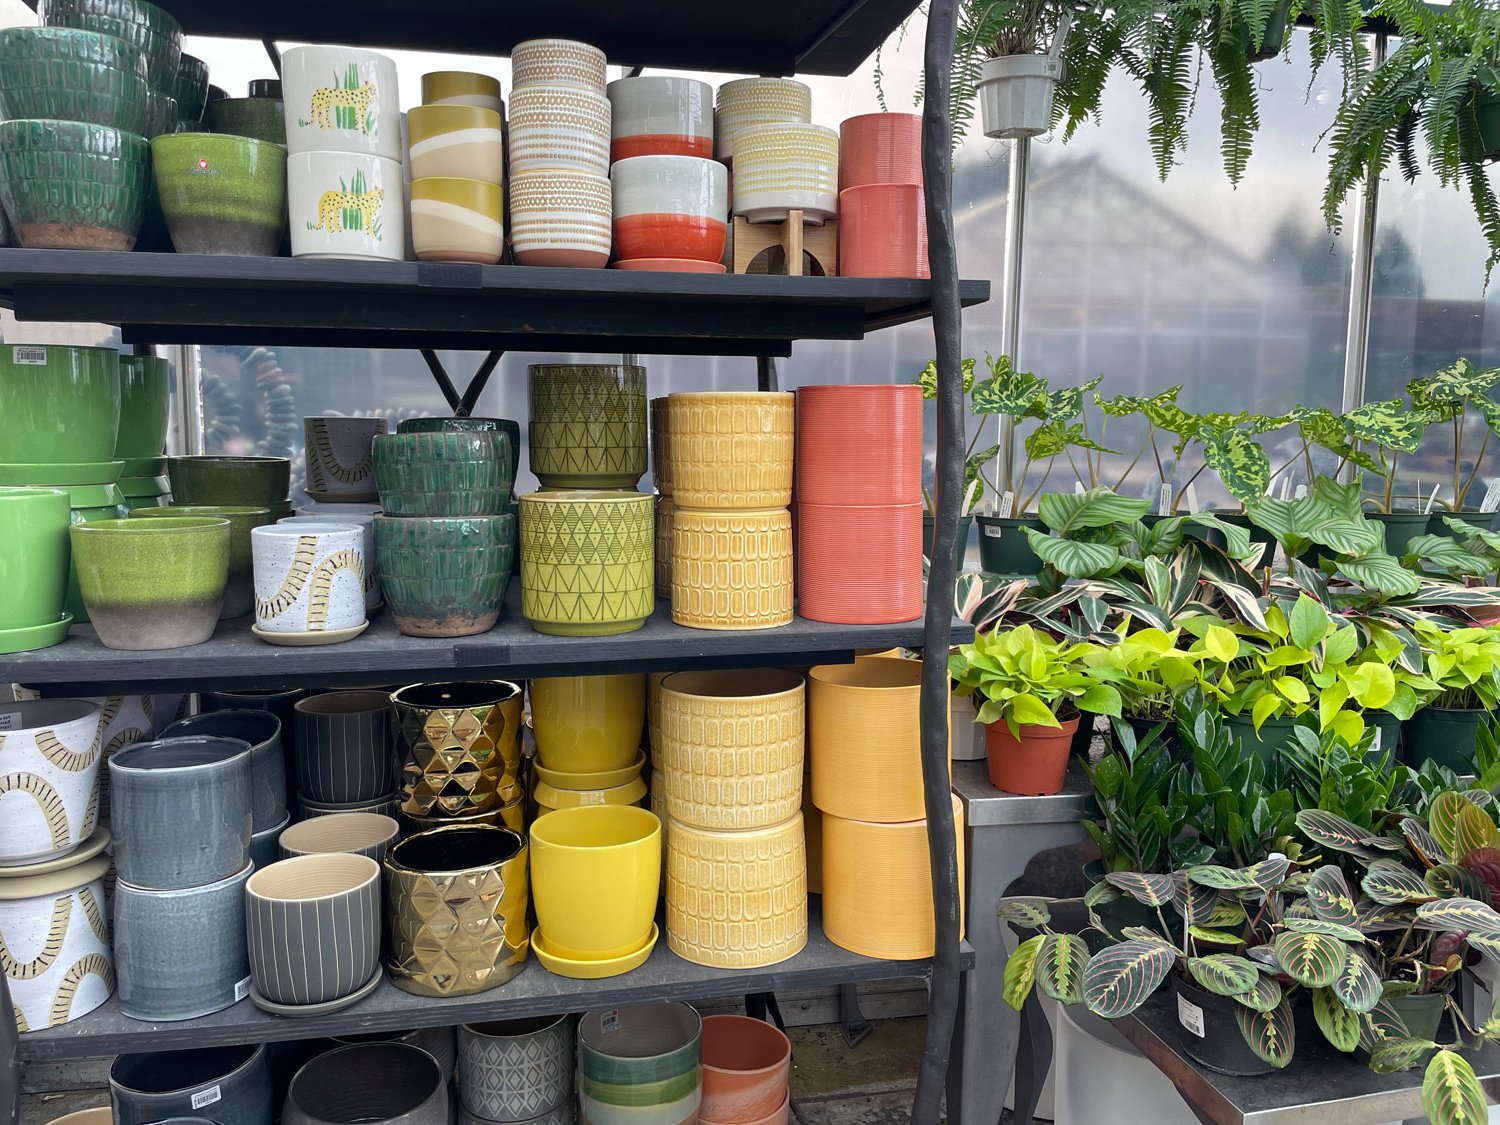 Pots for Indoor Plants — Seattle's Favorite Garden Store Since 1924 -  Swansons Nursery